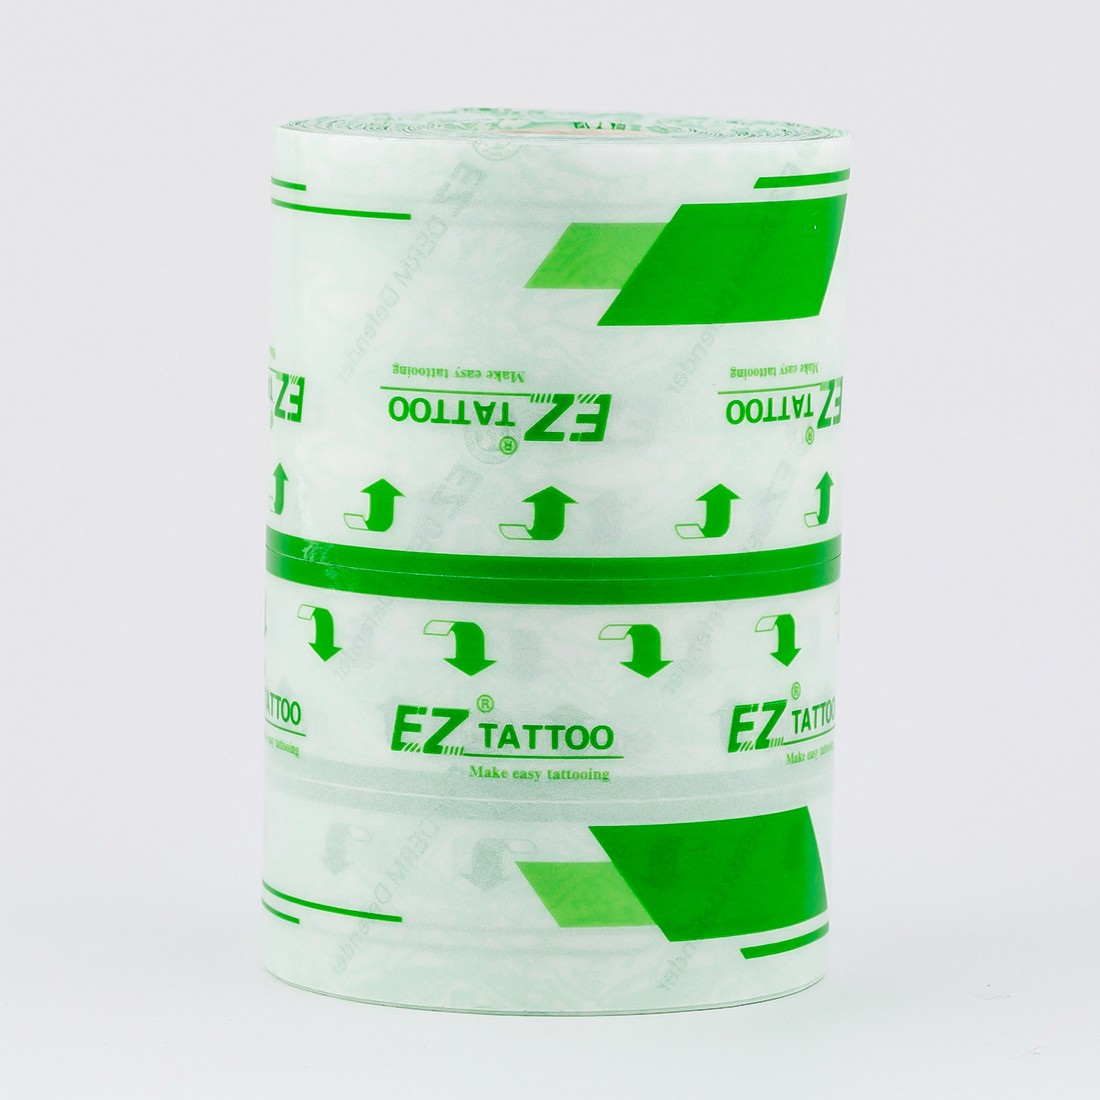 EZ Premium Derm Defender Tattoo Clear Adhesive Protective Shield Waterproof Tattoo Film Aftercare Skin Healing Dressings Repair